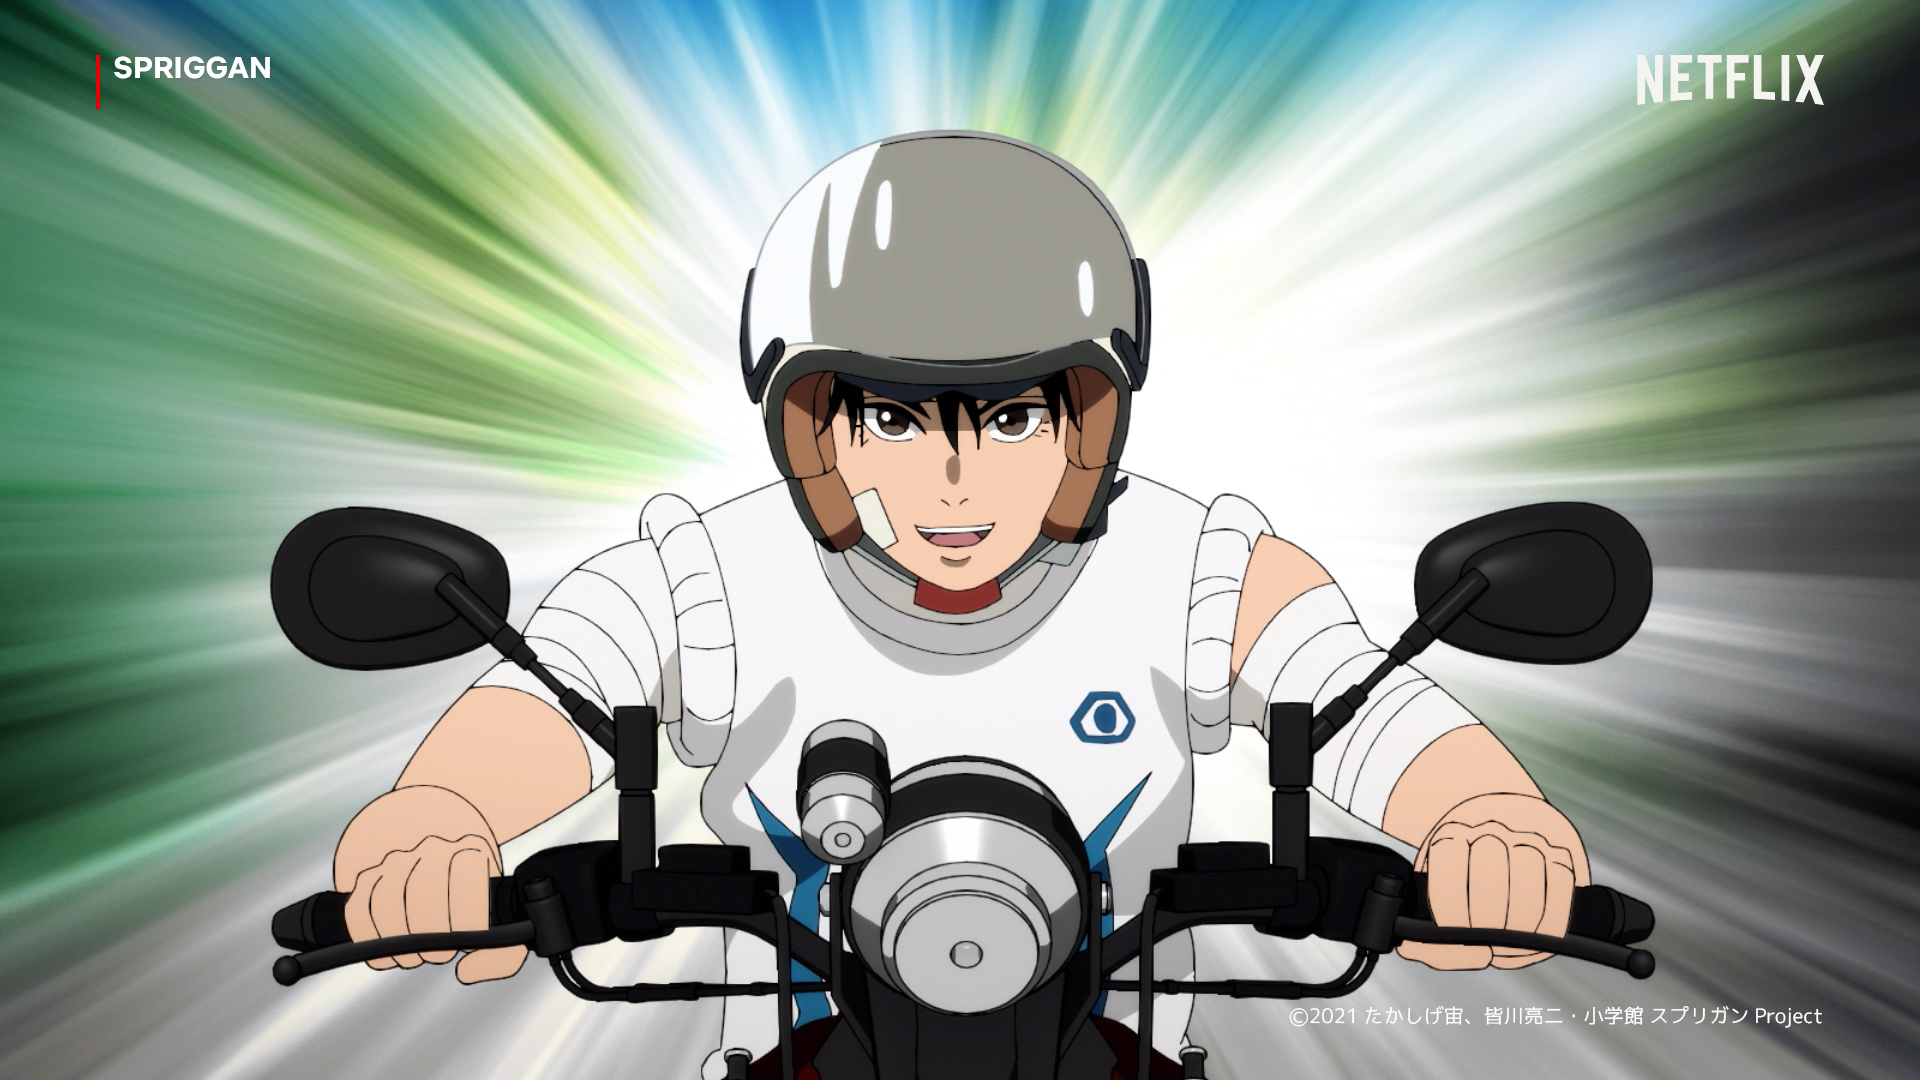 3D file Spriggan Anime Cosplay Helmet - Spriggan Neflix Anime